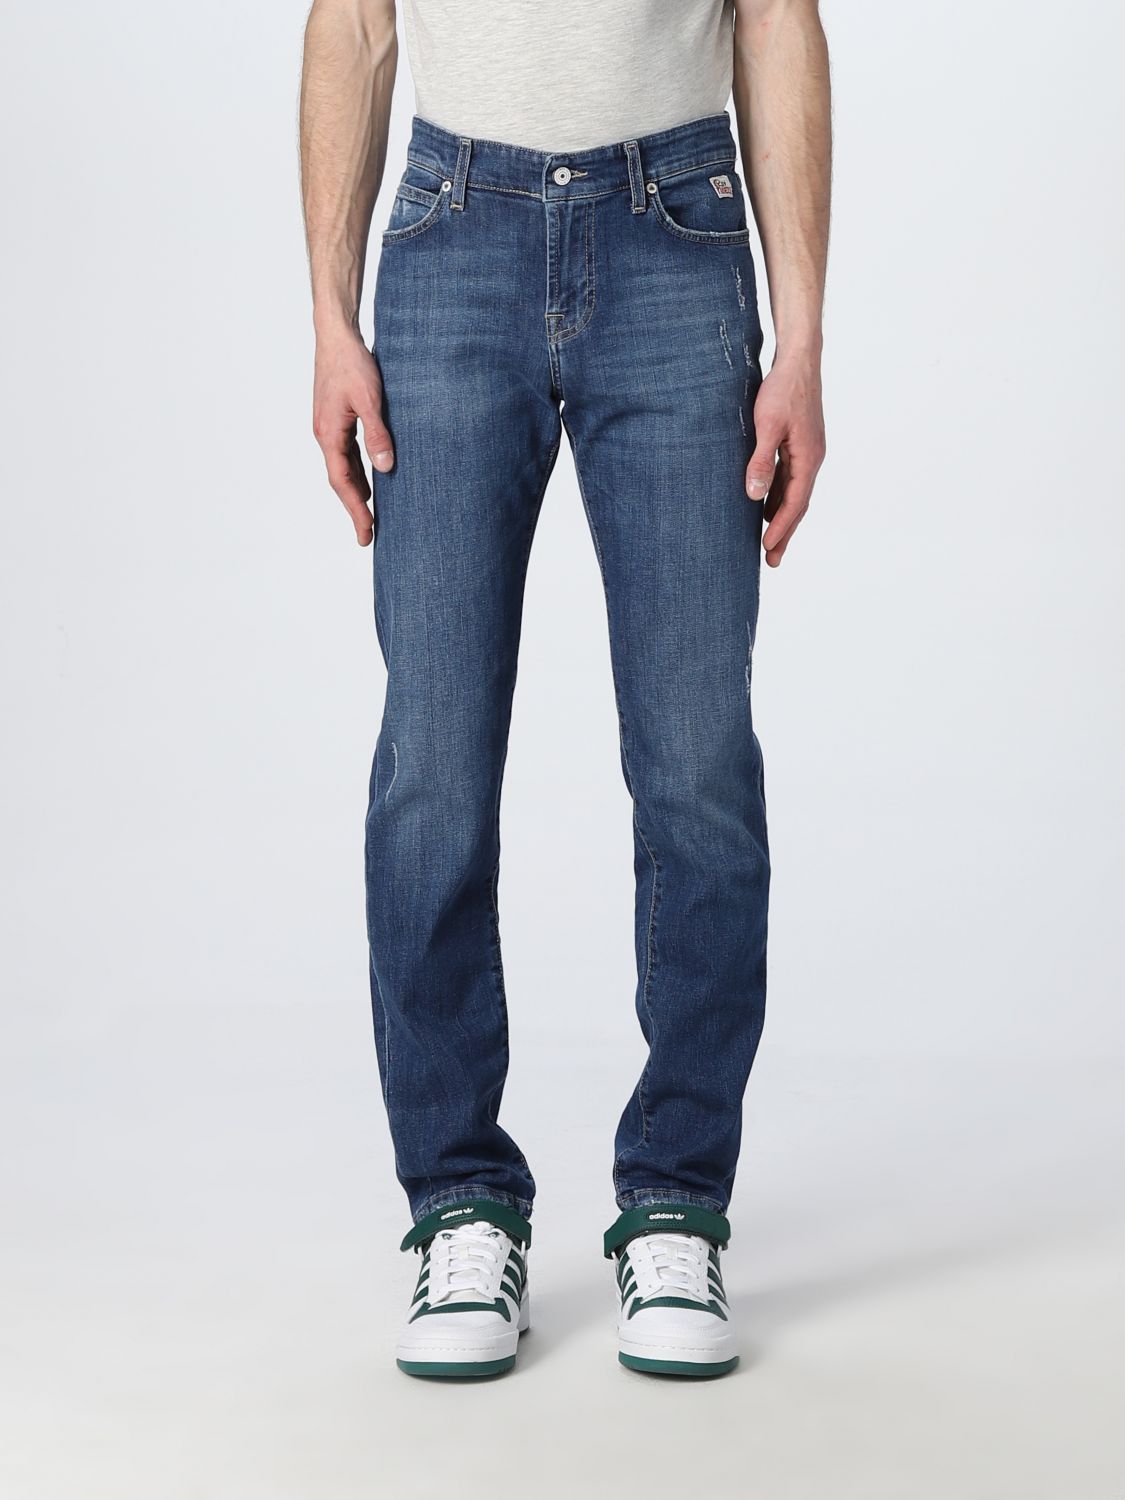 Roy Rogers Jeans Men In Denim | ModeSens